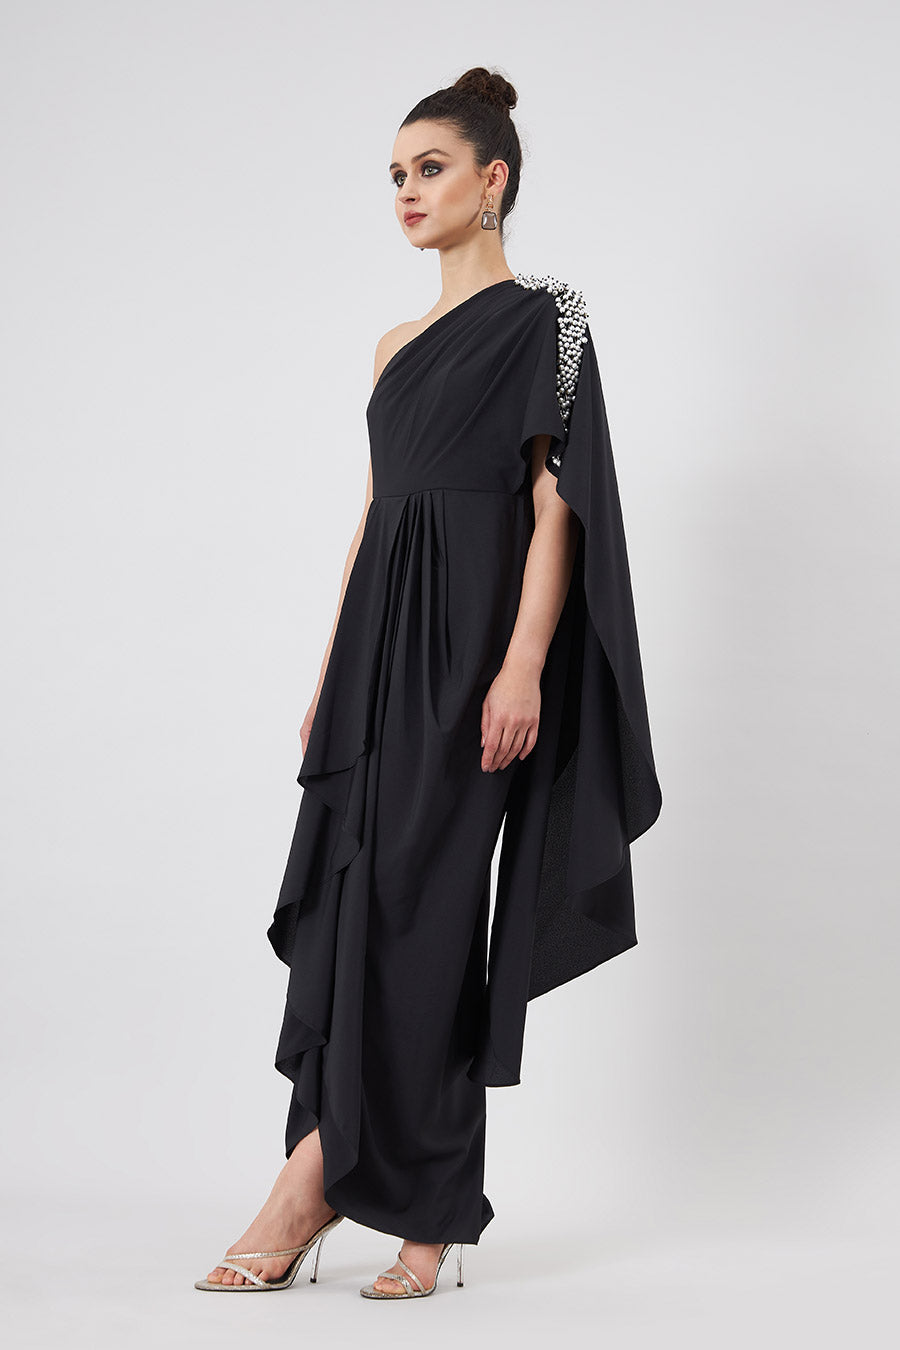 Pearl One-Shoulder Black Drape Dress